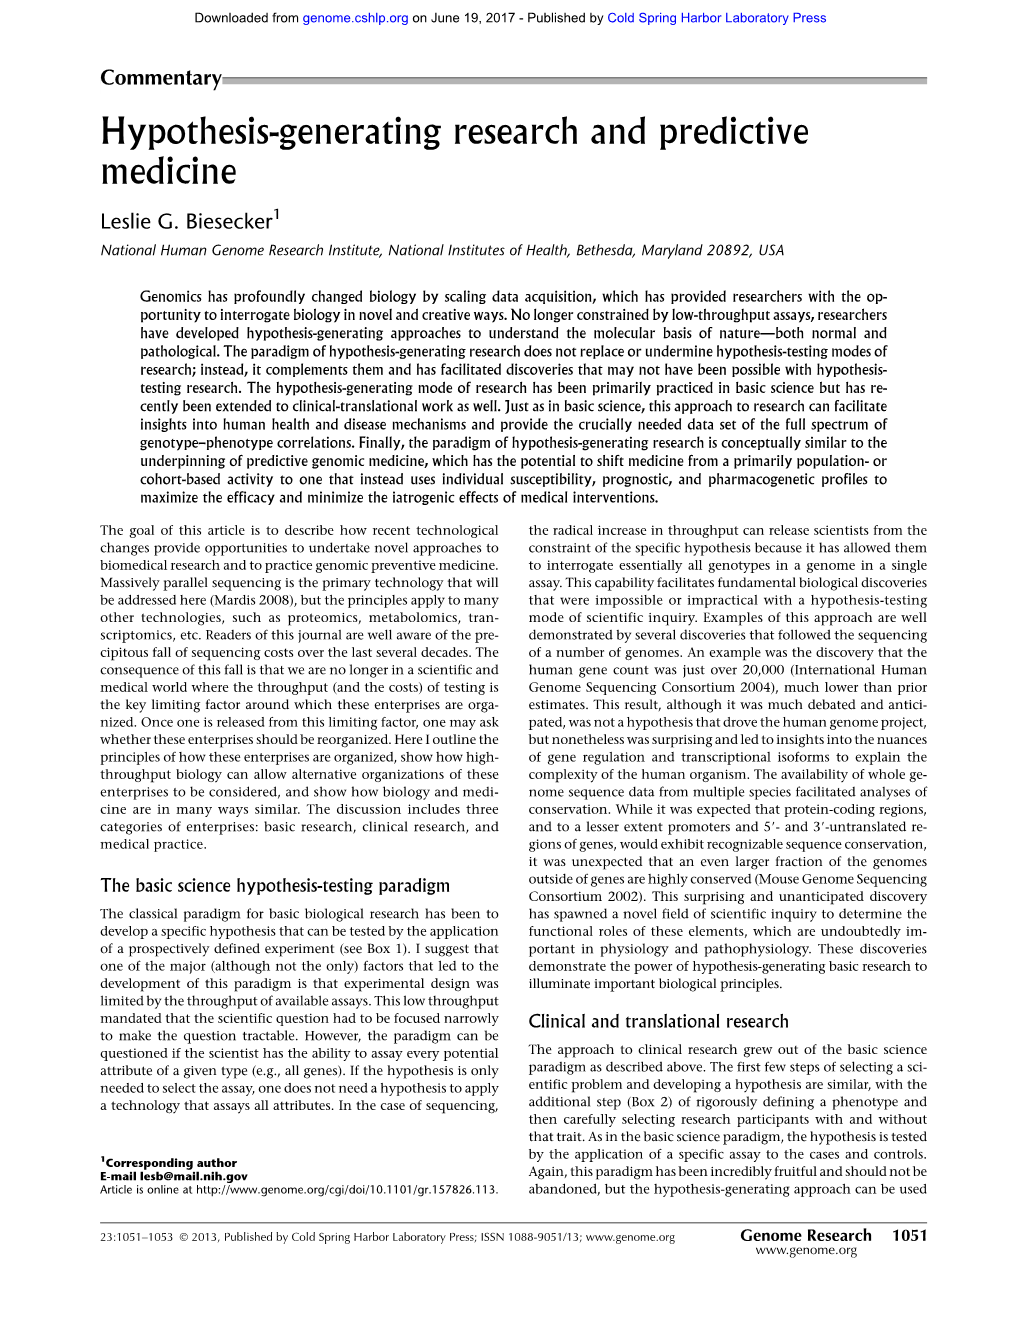 Hypothesis-Generating Research and Predictive Medicine